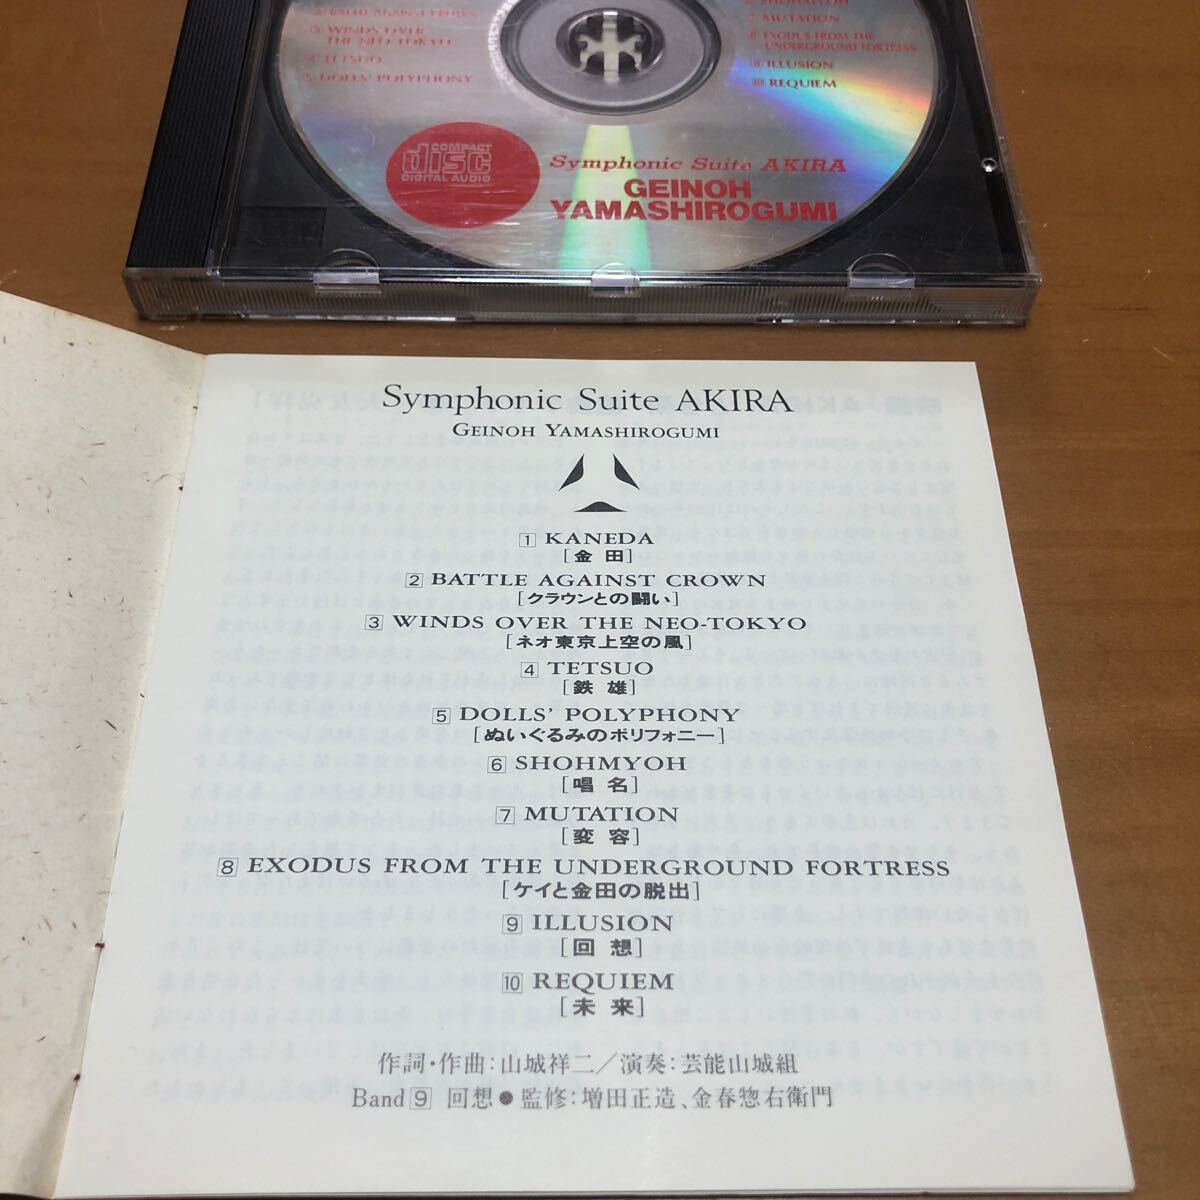 ◆ CD ◆「Symphonic Suite AKIRA」／芸能山城組／サウンドトラック◆東宝配給アニメ映画「AKIRA」VDR-1532 ◆ 【送料無料】の画像4